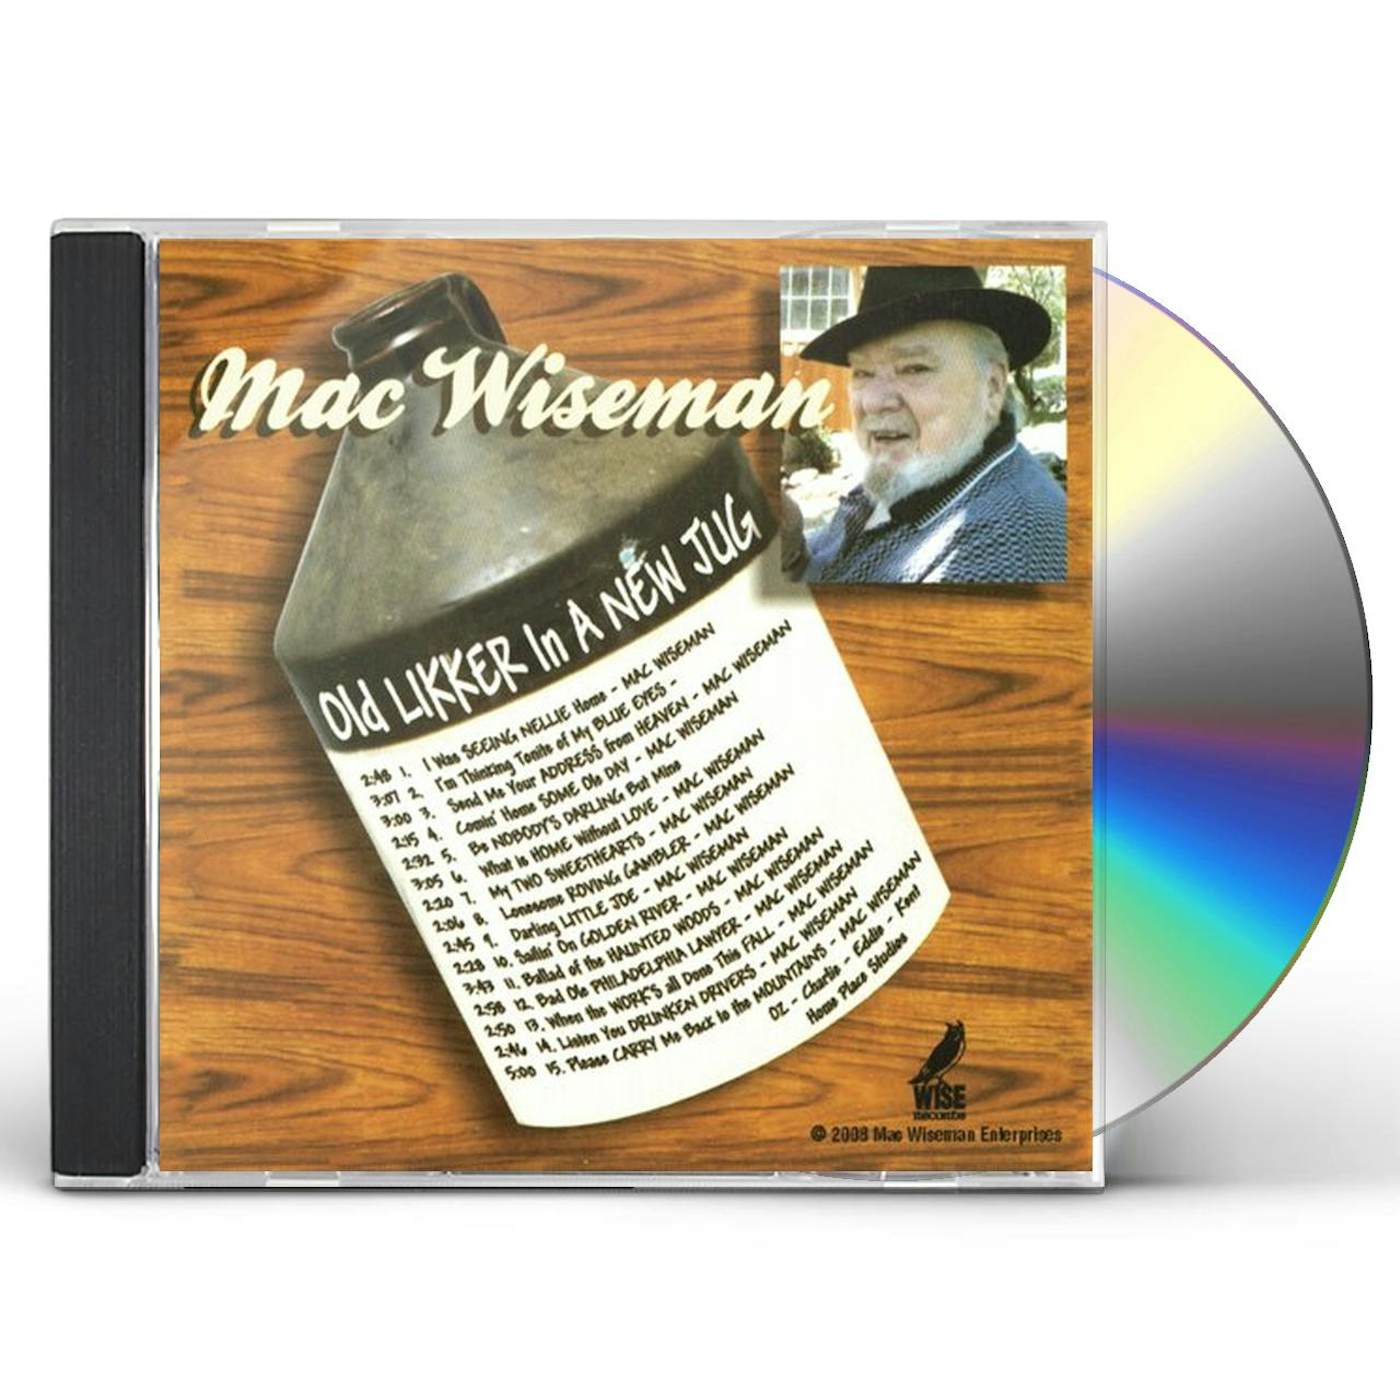 Mac Wiseman OLD LIKKER IN A NEW JUG CD